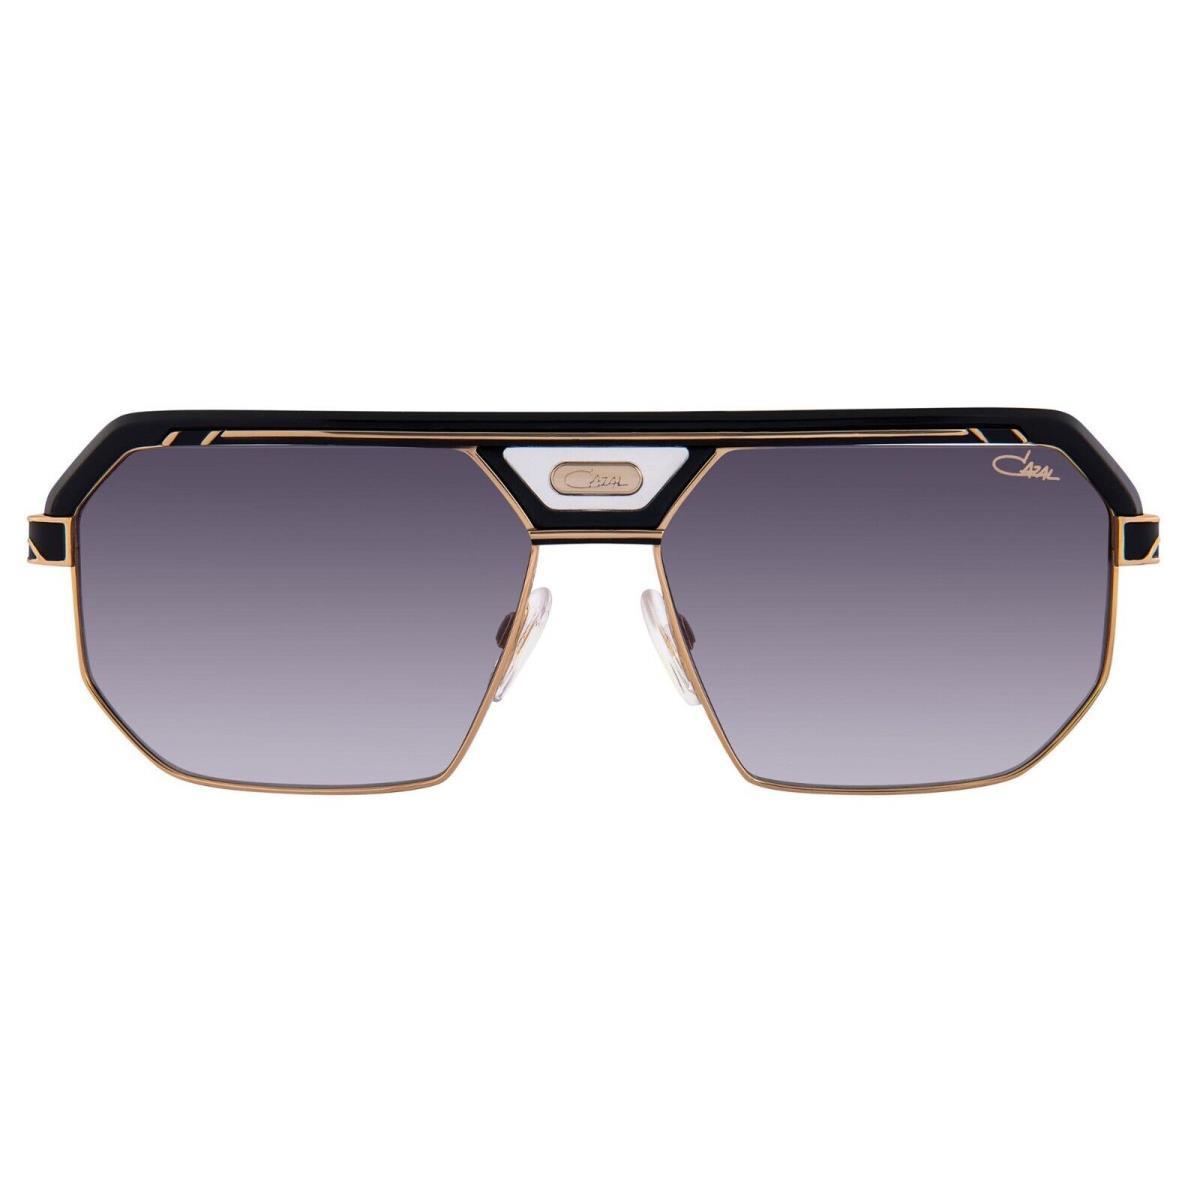 Cazal 676 Black Gold/grey Shaded 001 Sunglasses